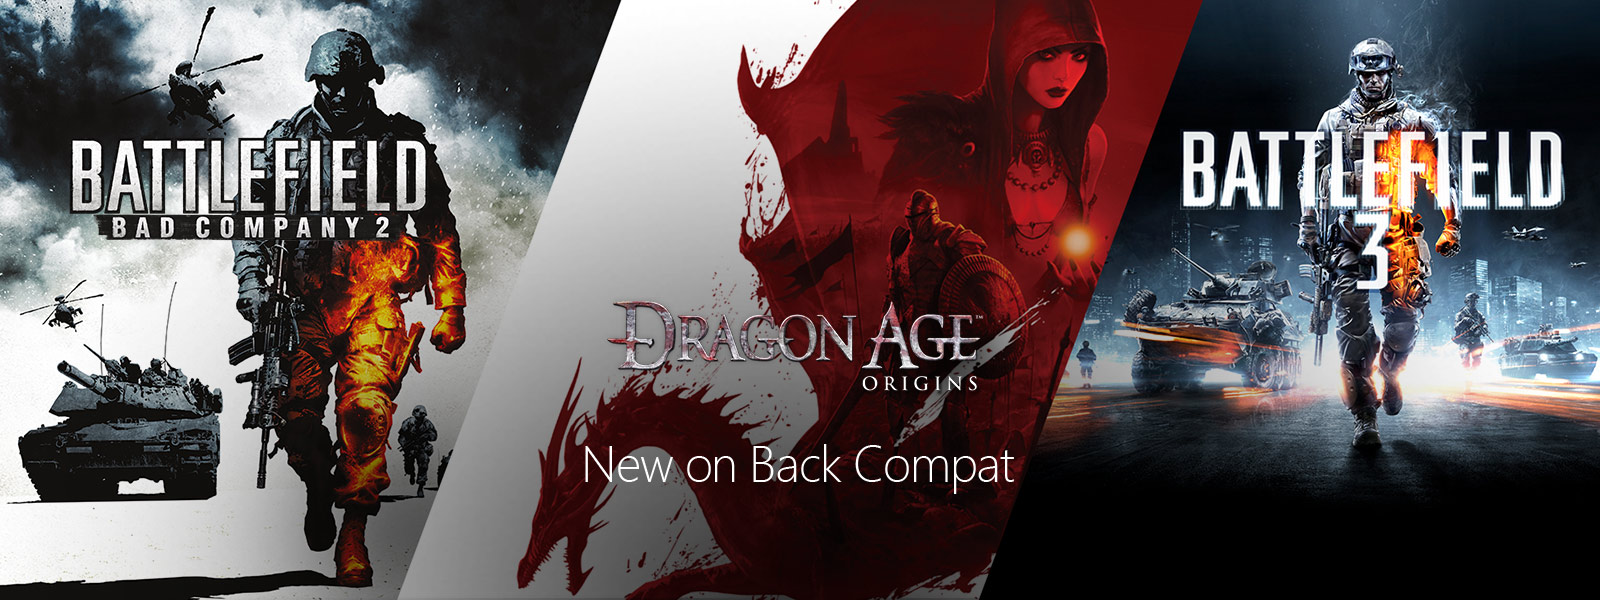 dragon age origins and battlefield 3 on Backward Compatibility